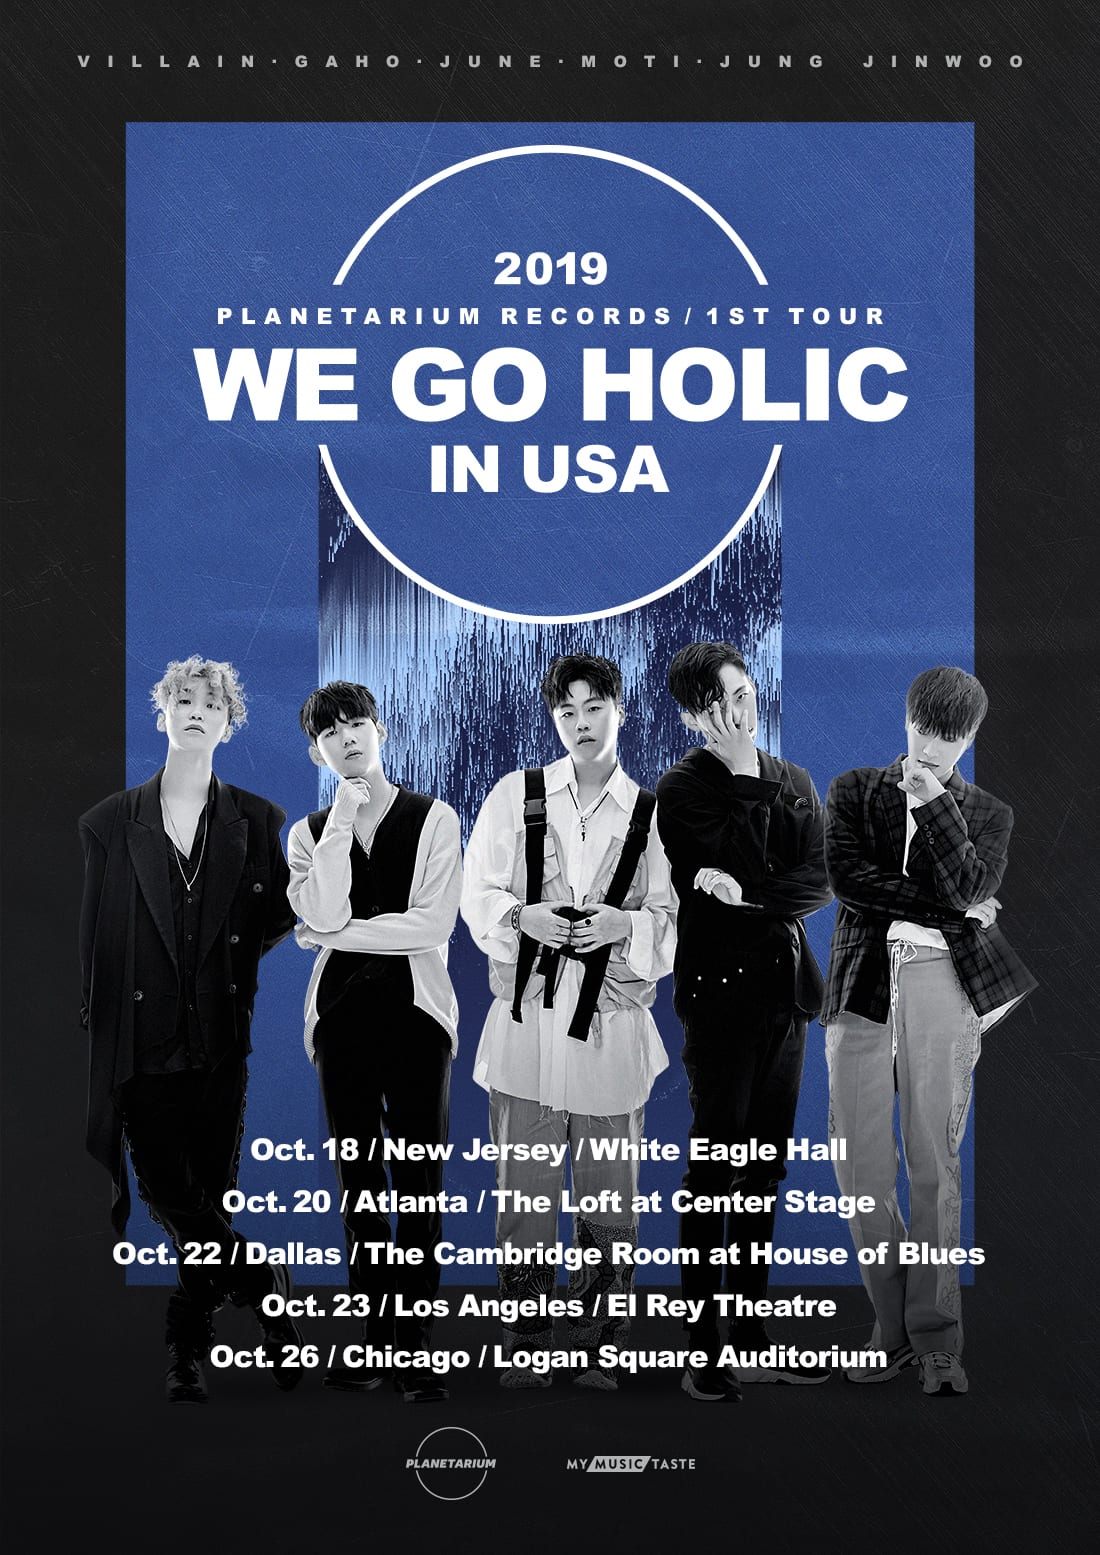 2019 PLANETARIUM RECORDS 1ST TOUR "WE GO HOLIC" IN USA (poster)